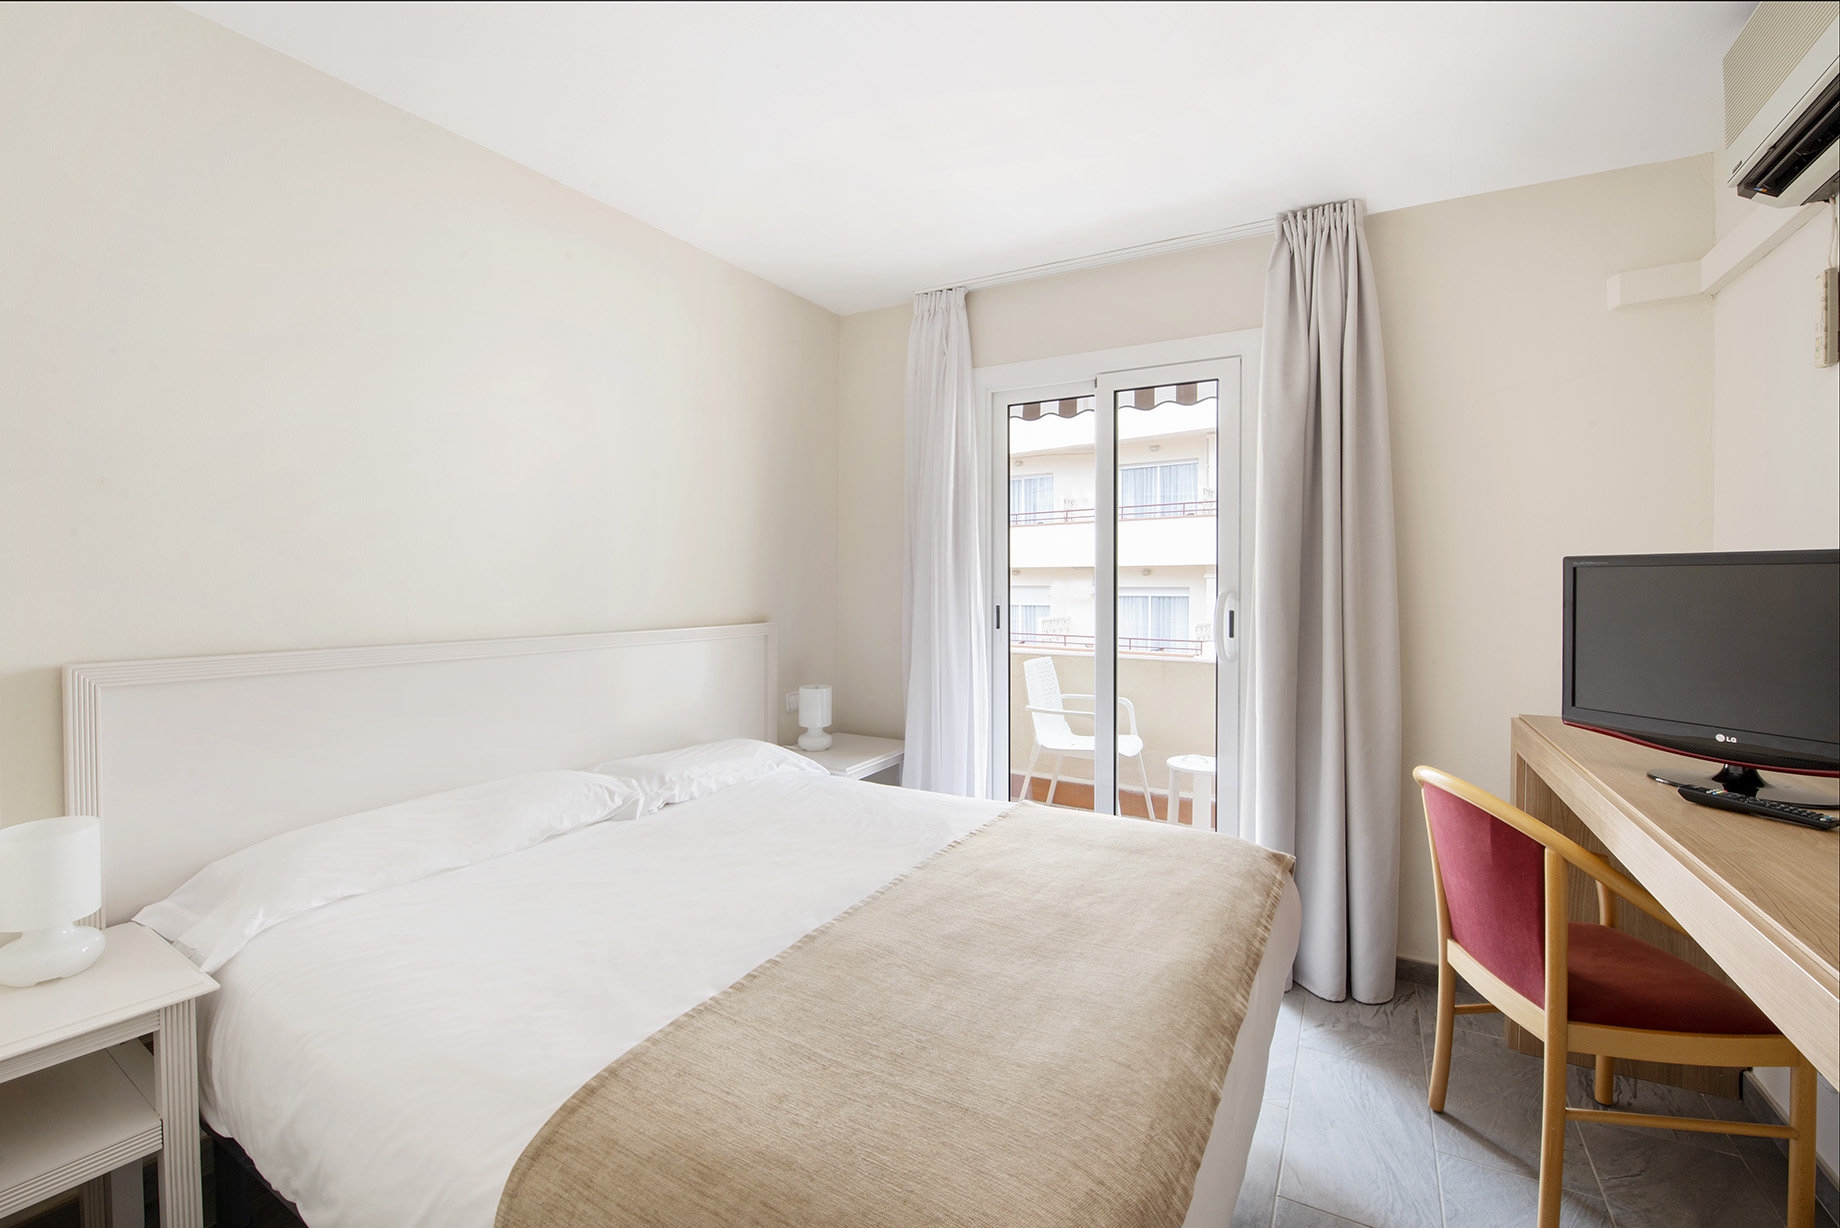 Hotel La Santa Maria - Sitges - Great prices at HOTEL INFO